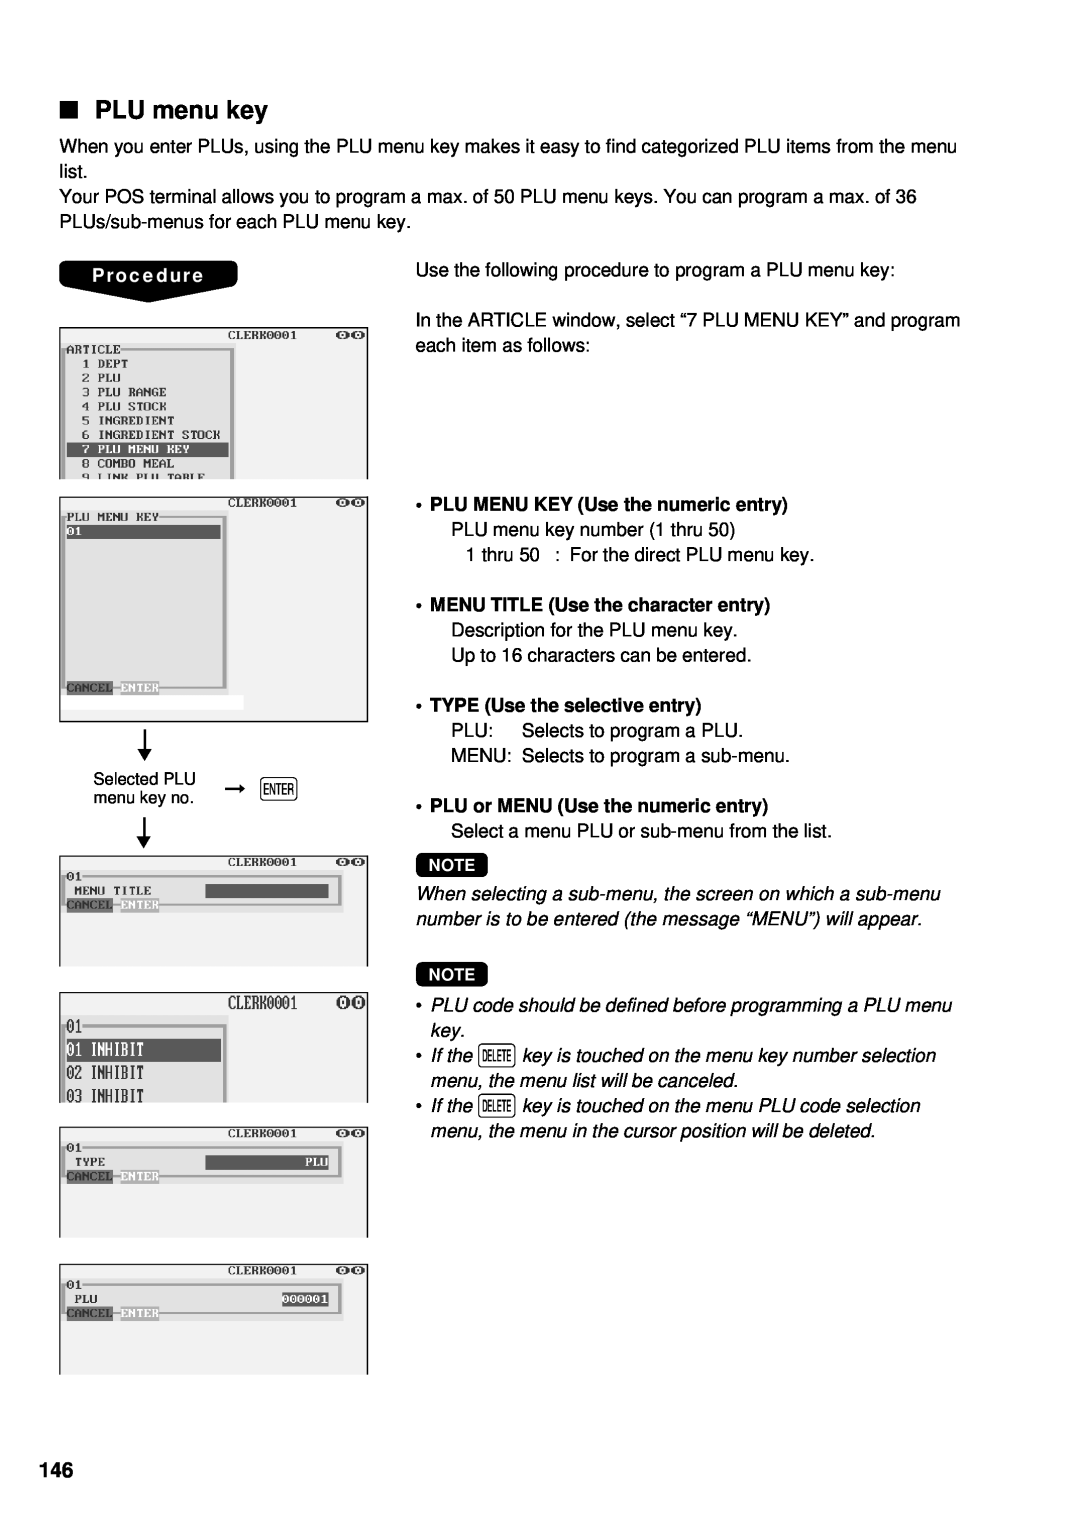 Sharp UP-3300 instruction manual PLU menu key, •TYPE Use the selective entry, Procedure 